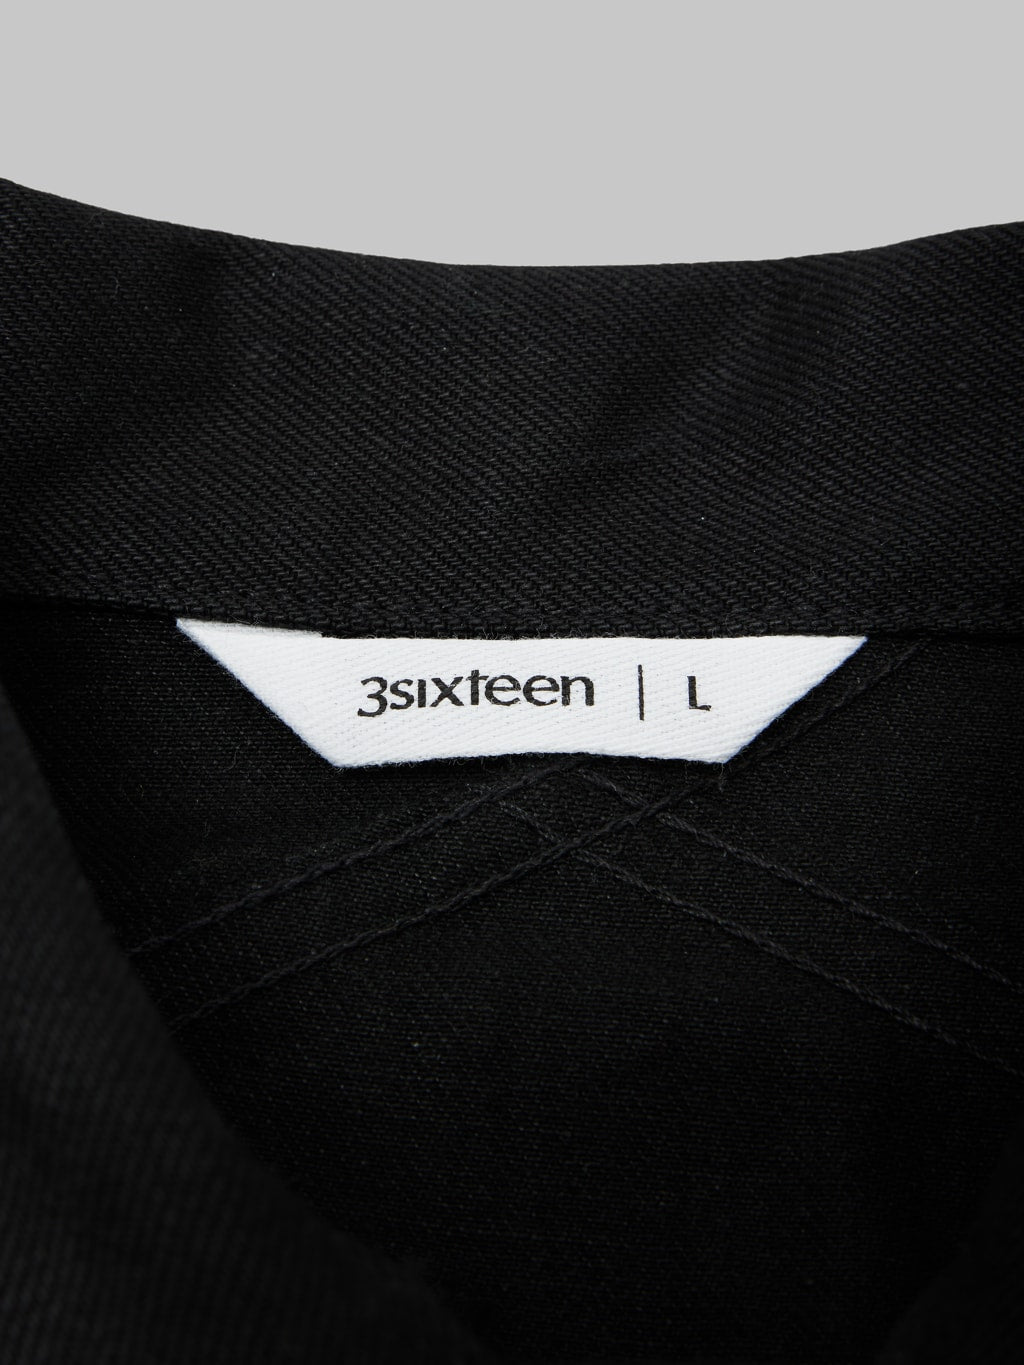 3sixteen type III denim jacket double black brand label